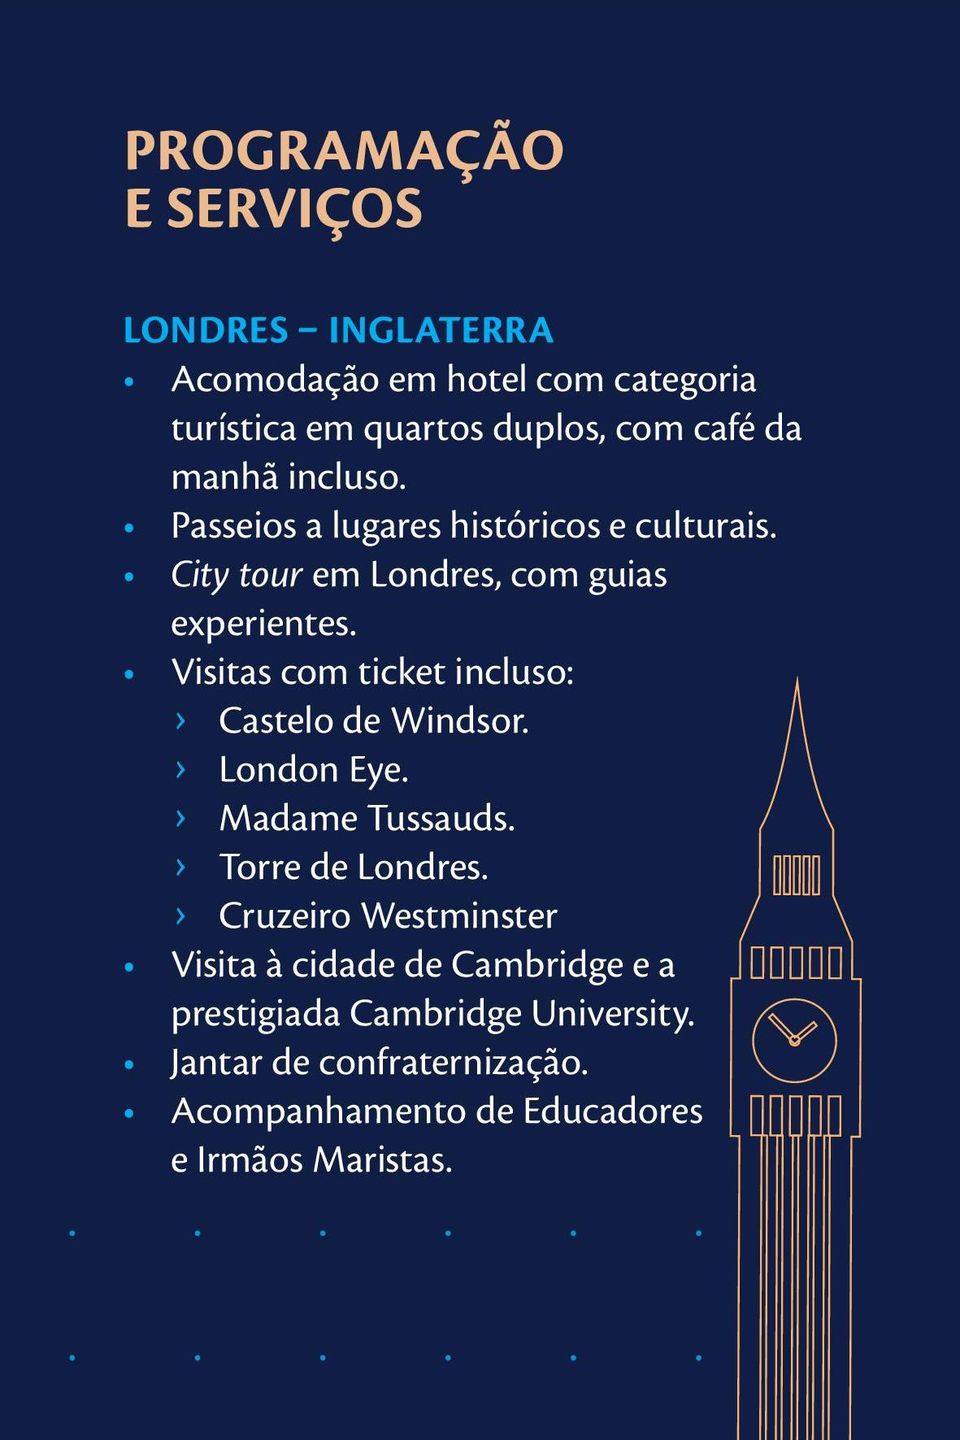 Visitas com ticket incluso: Castelo de Windsor. London Eye. Madame Tussauds. Torre de Londres.